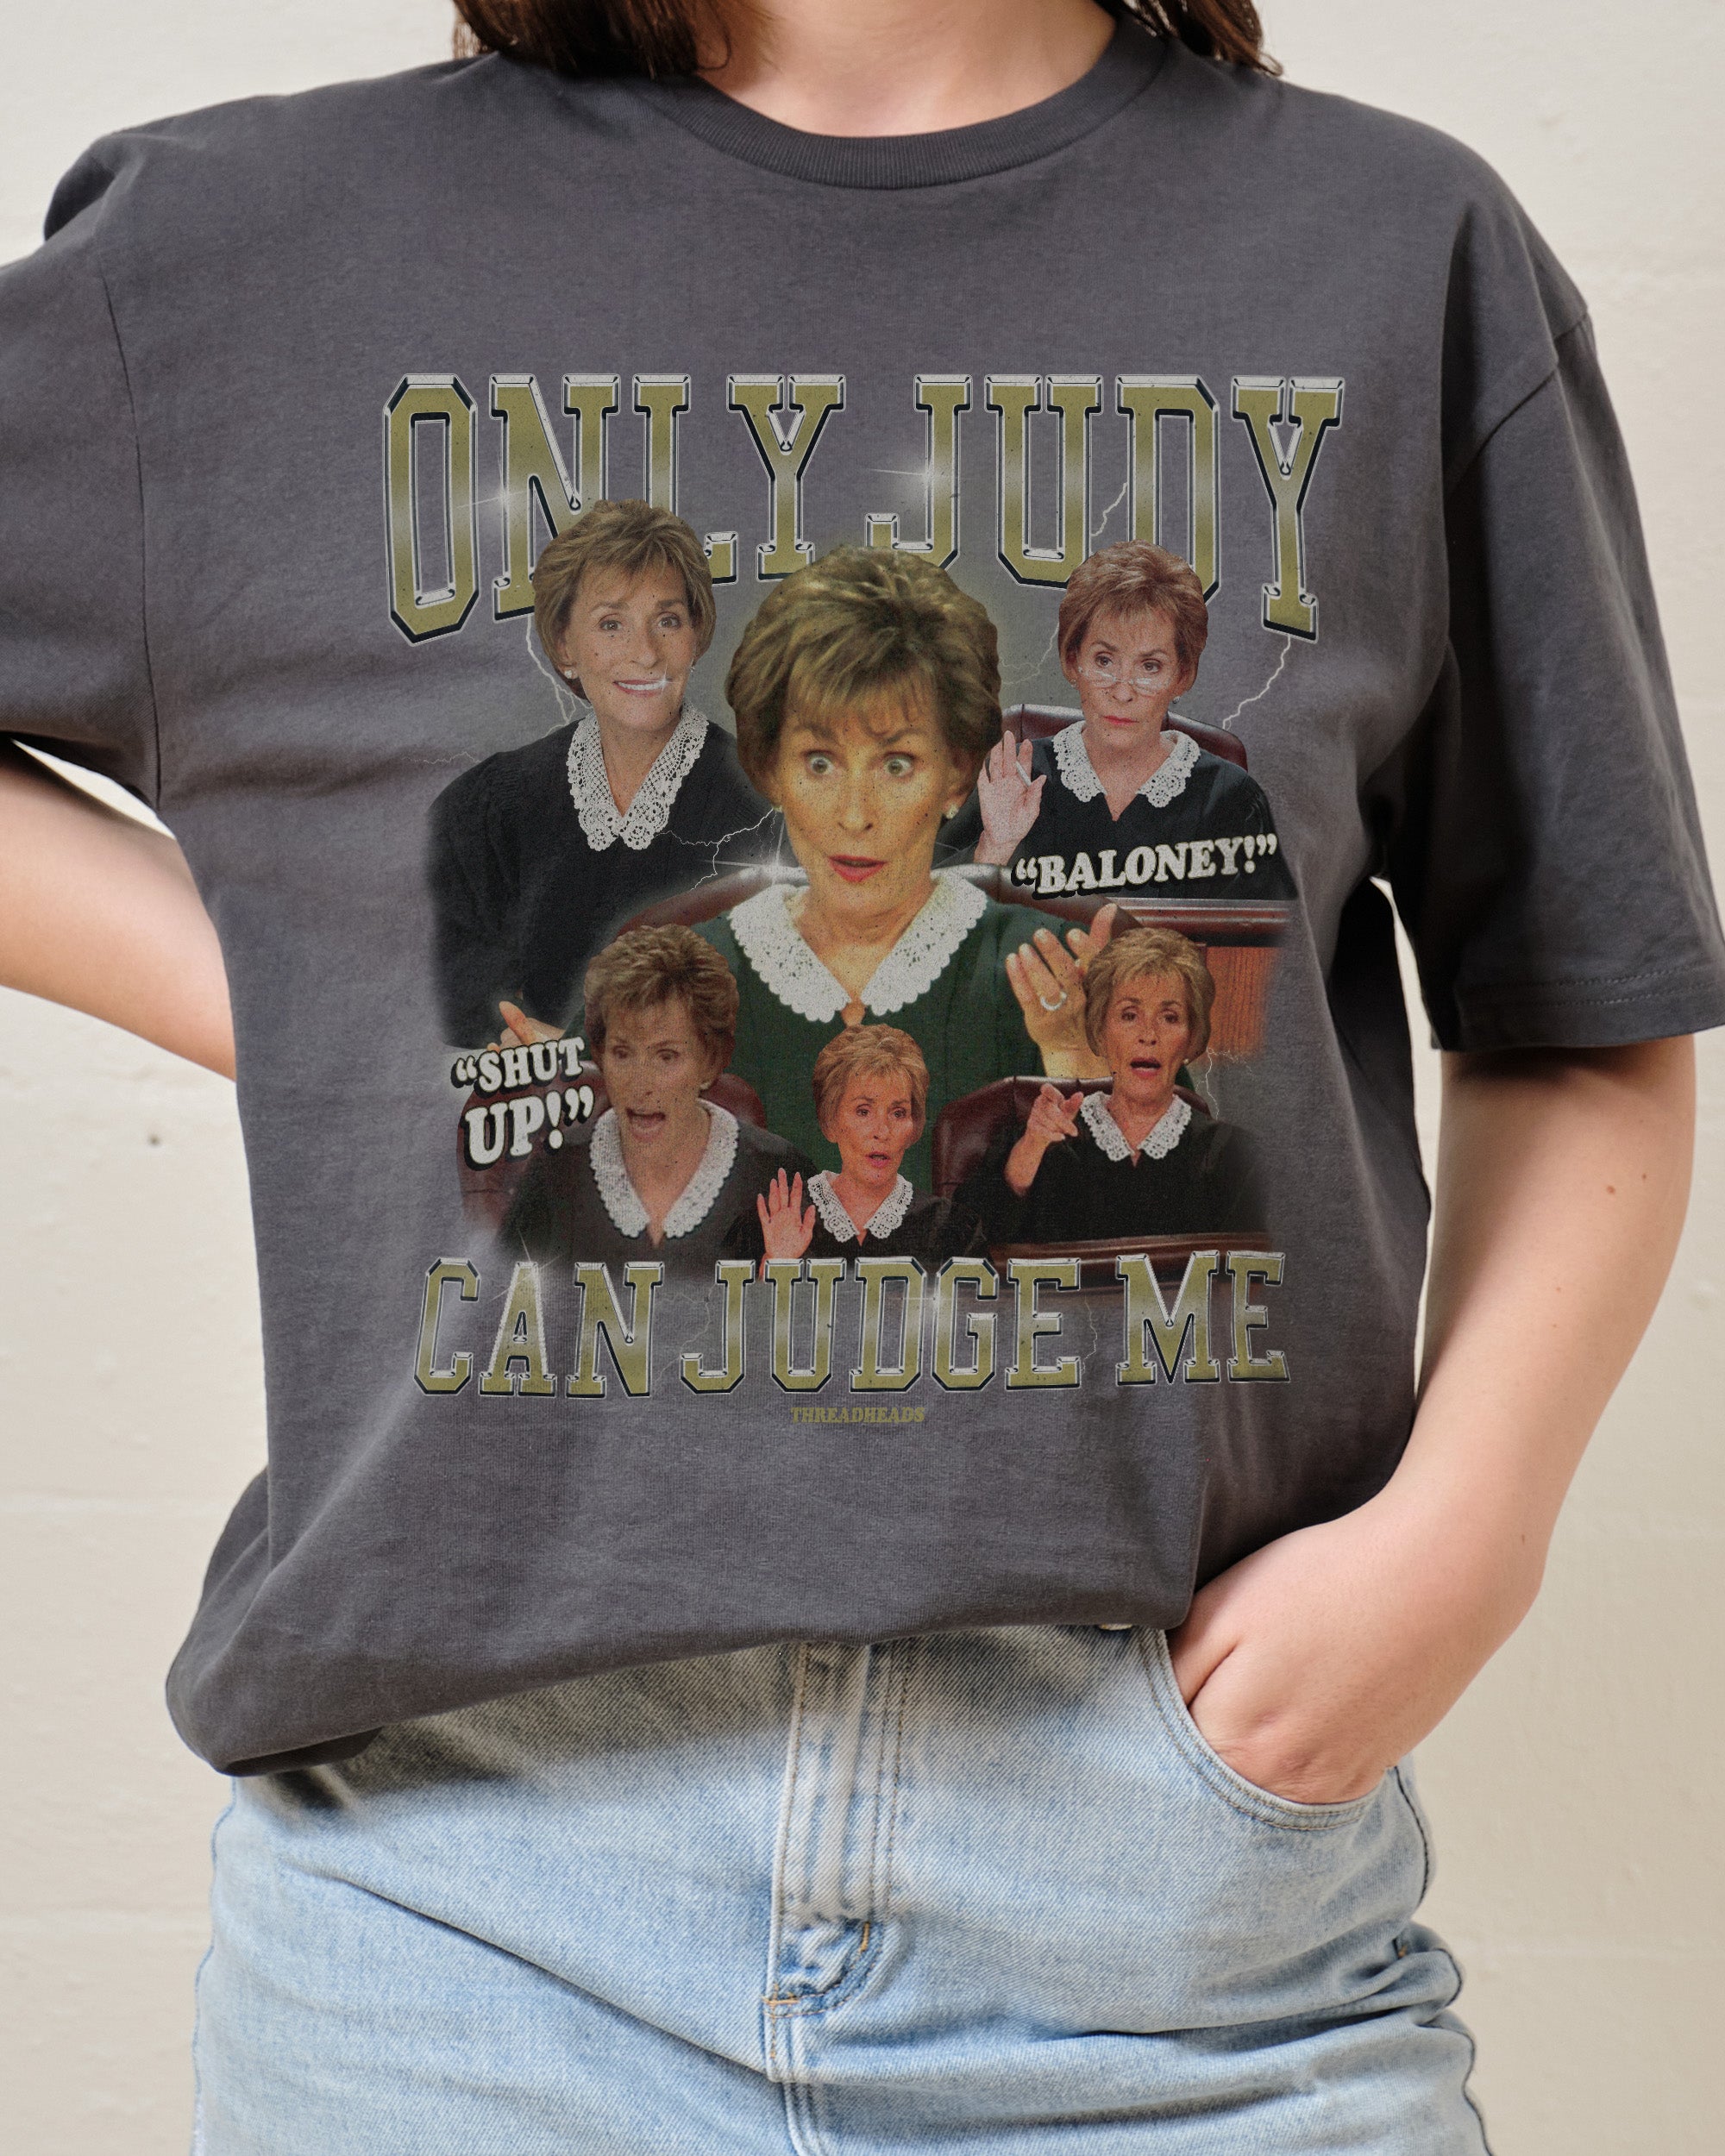 Judge Judy T-Shirt Australia Online Coal